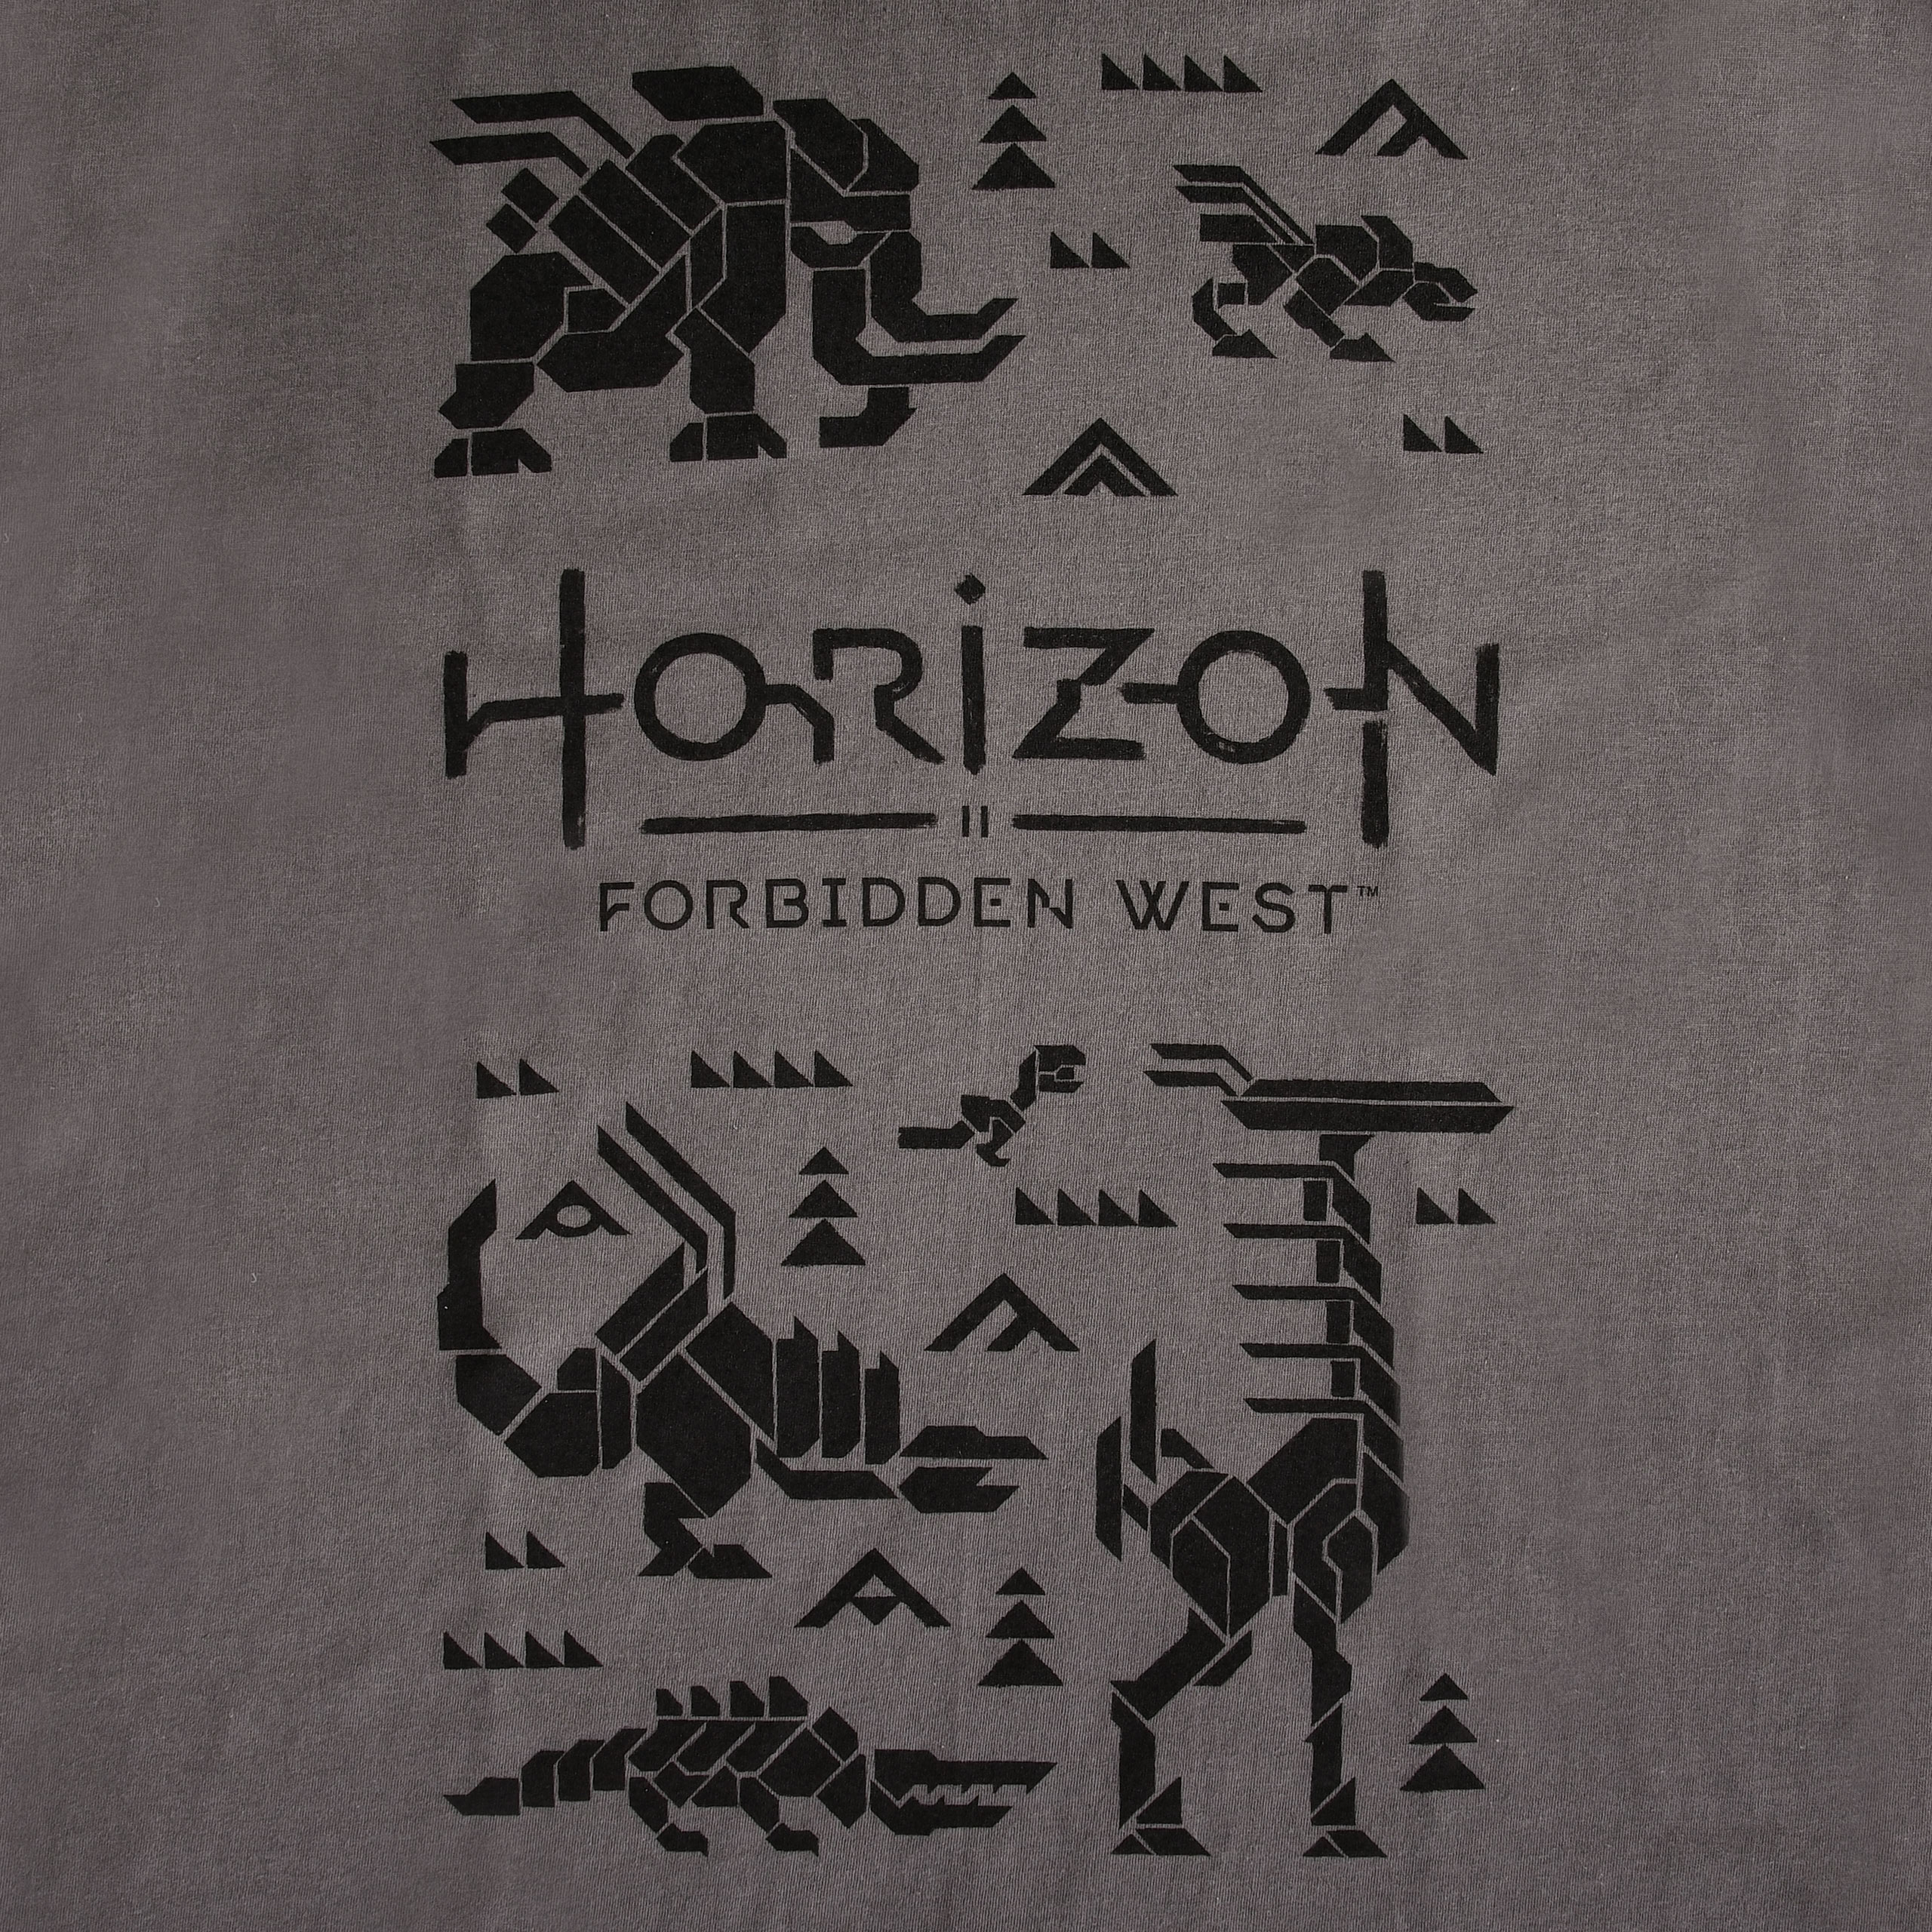 Horizon - Machines T-Shirt grau